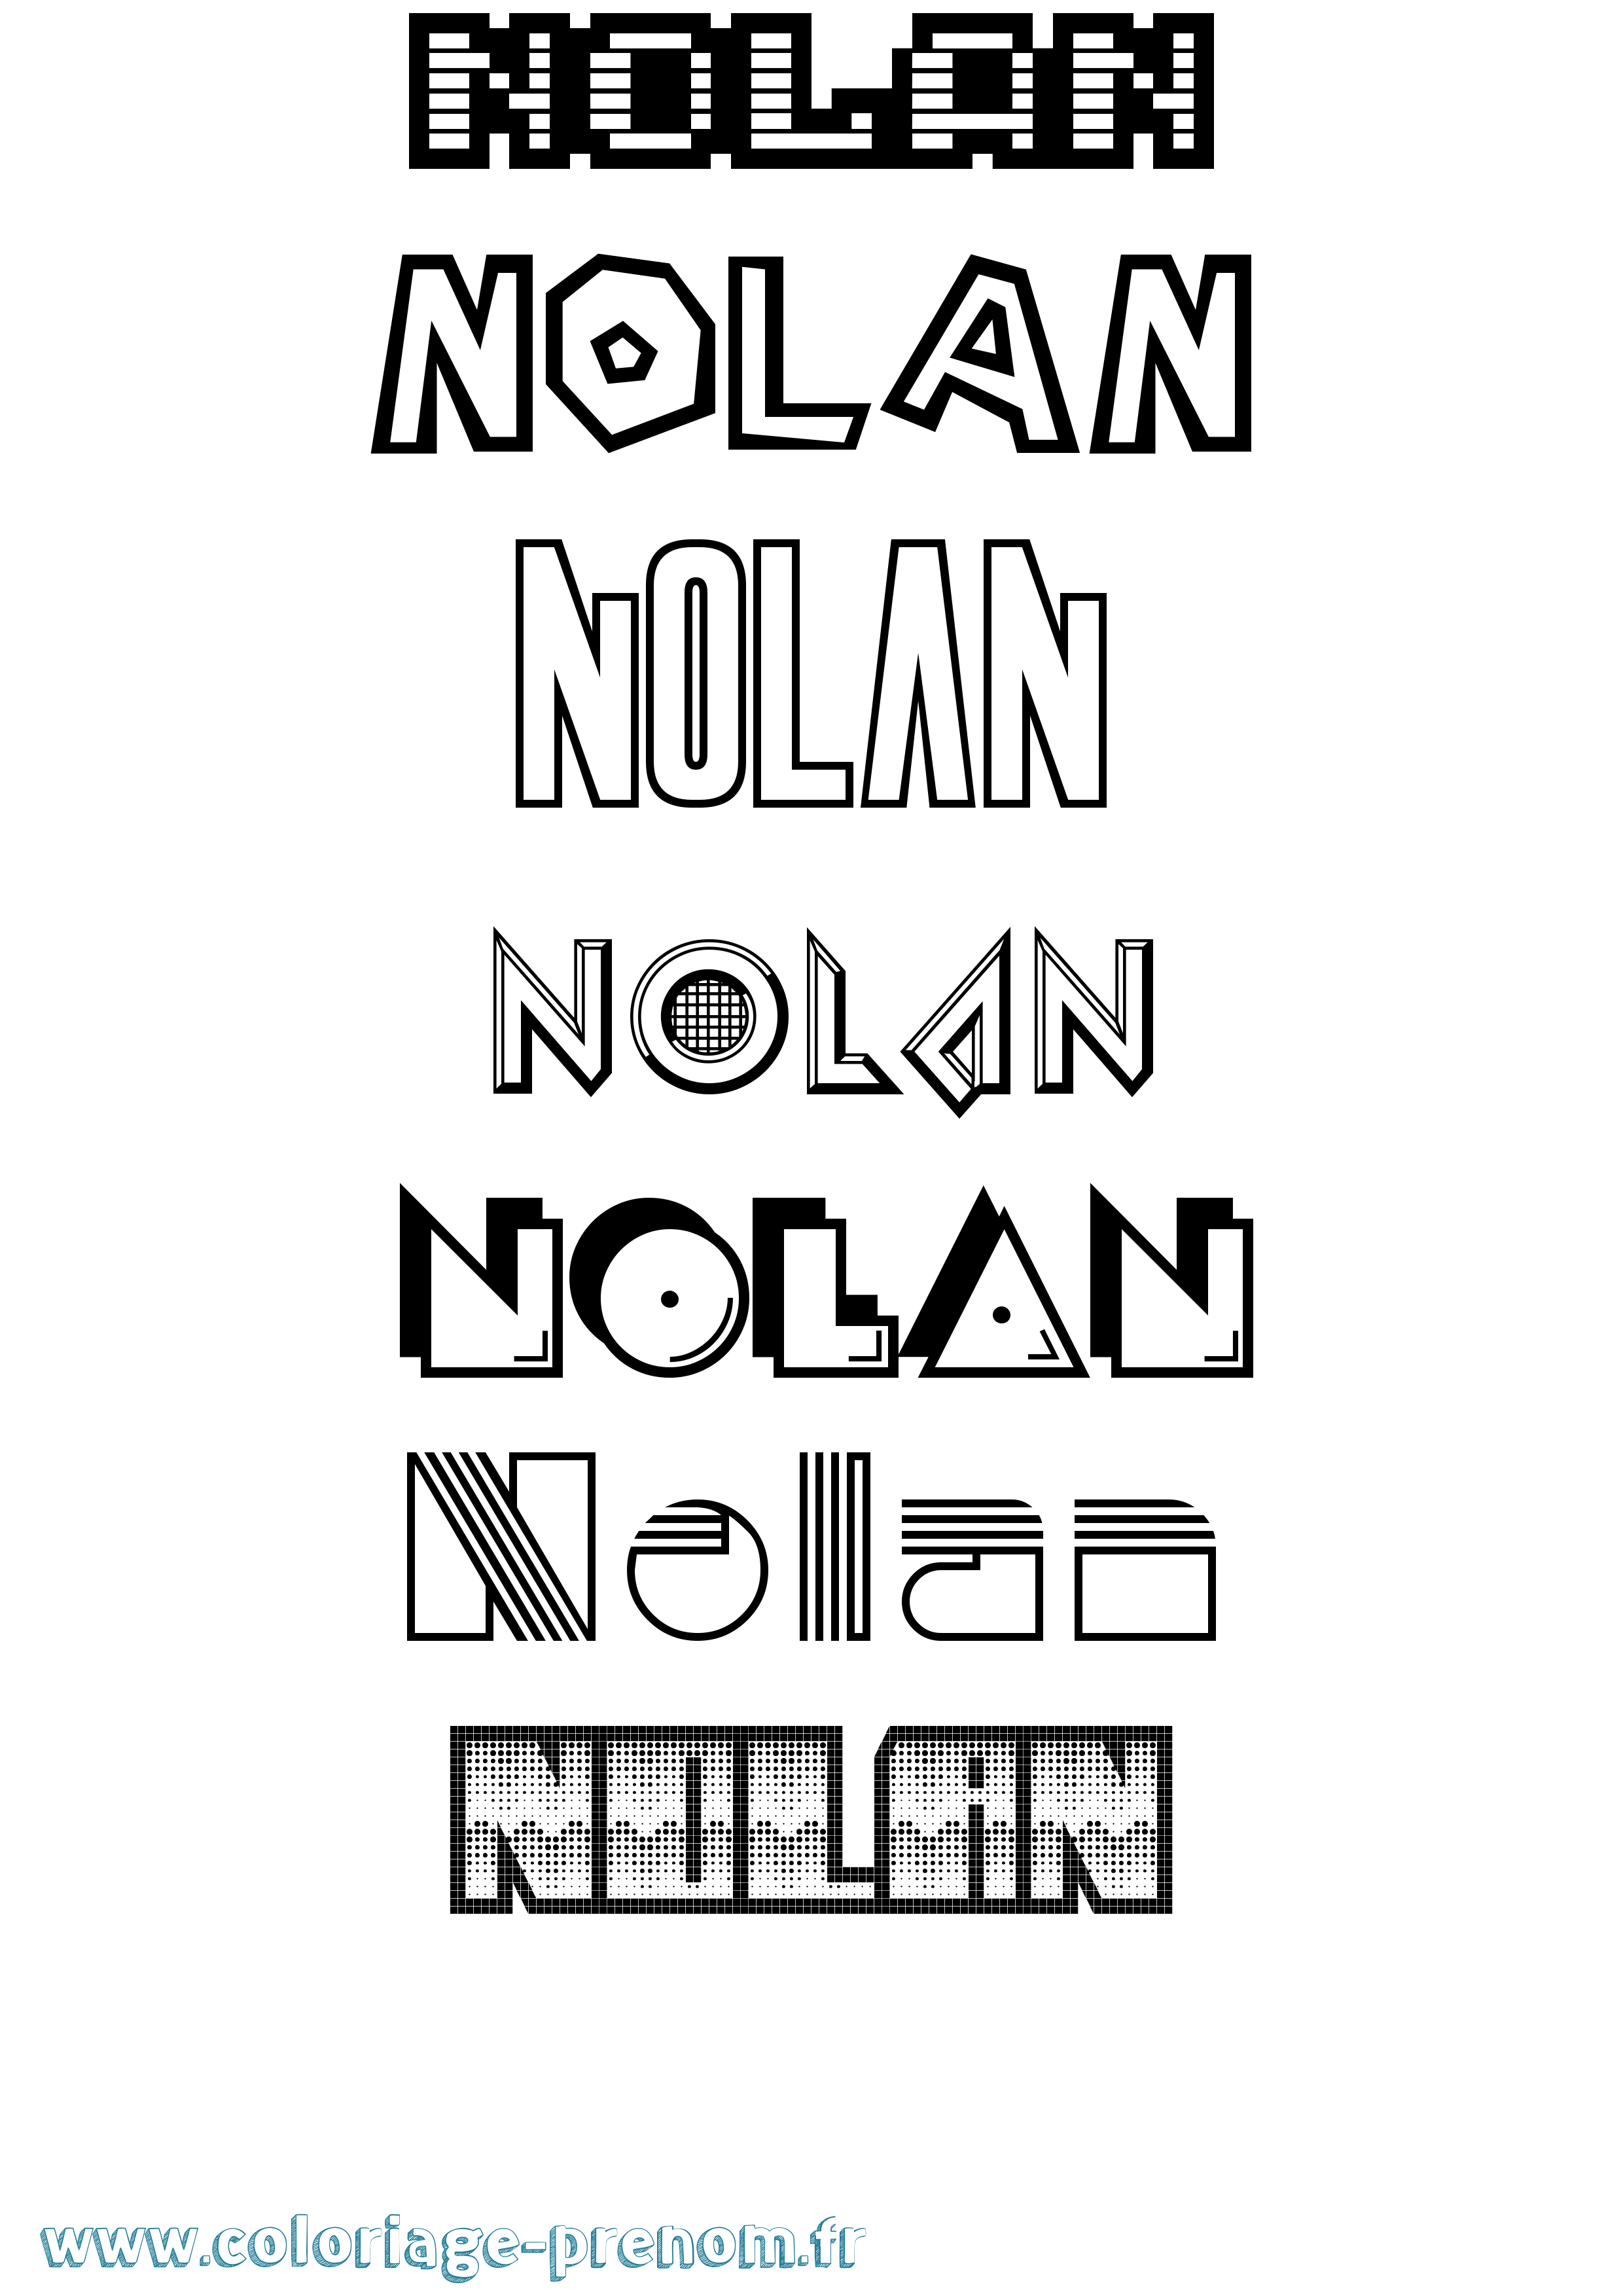 Coloriage prénom Nolan